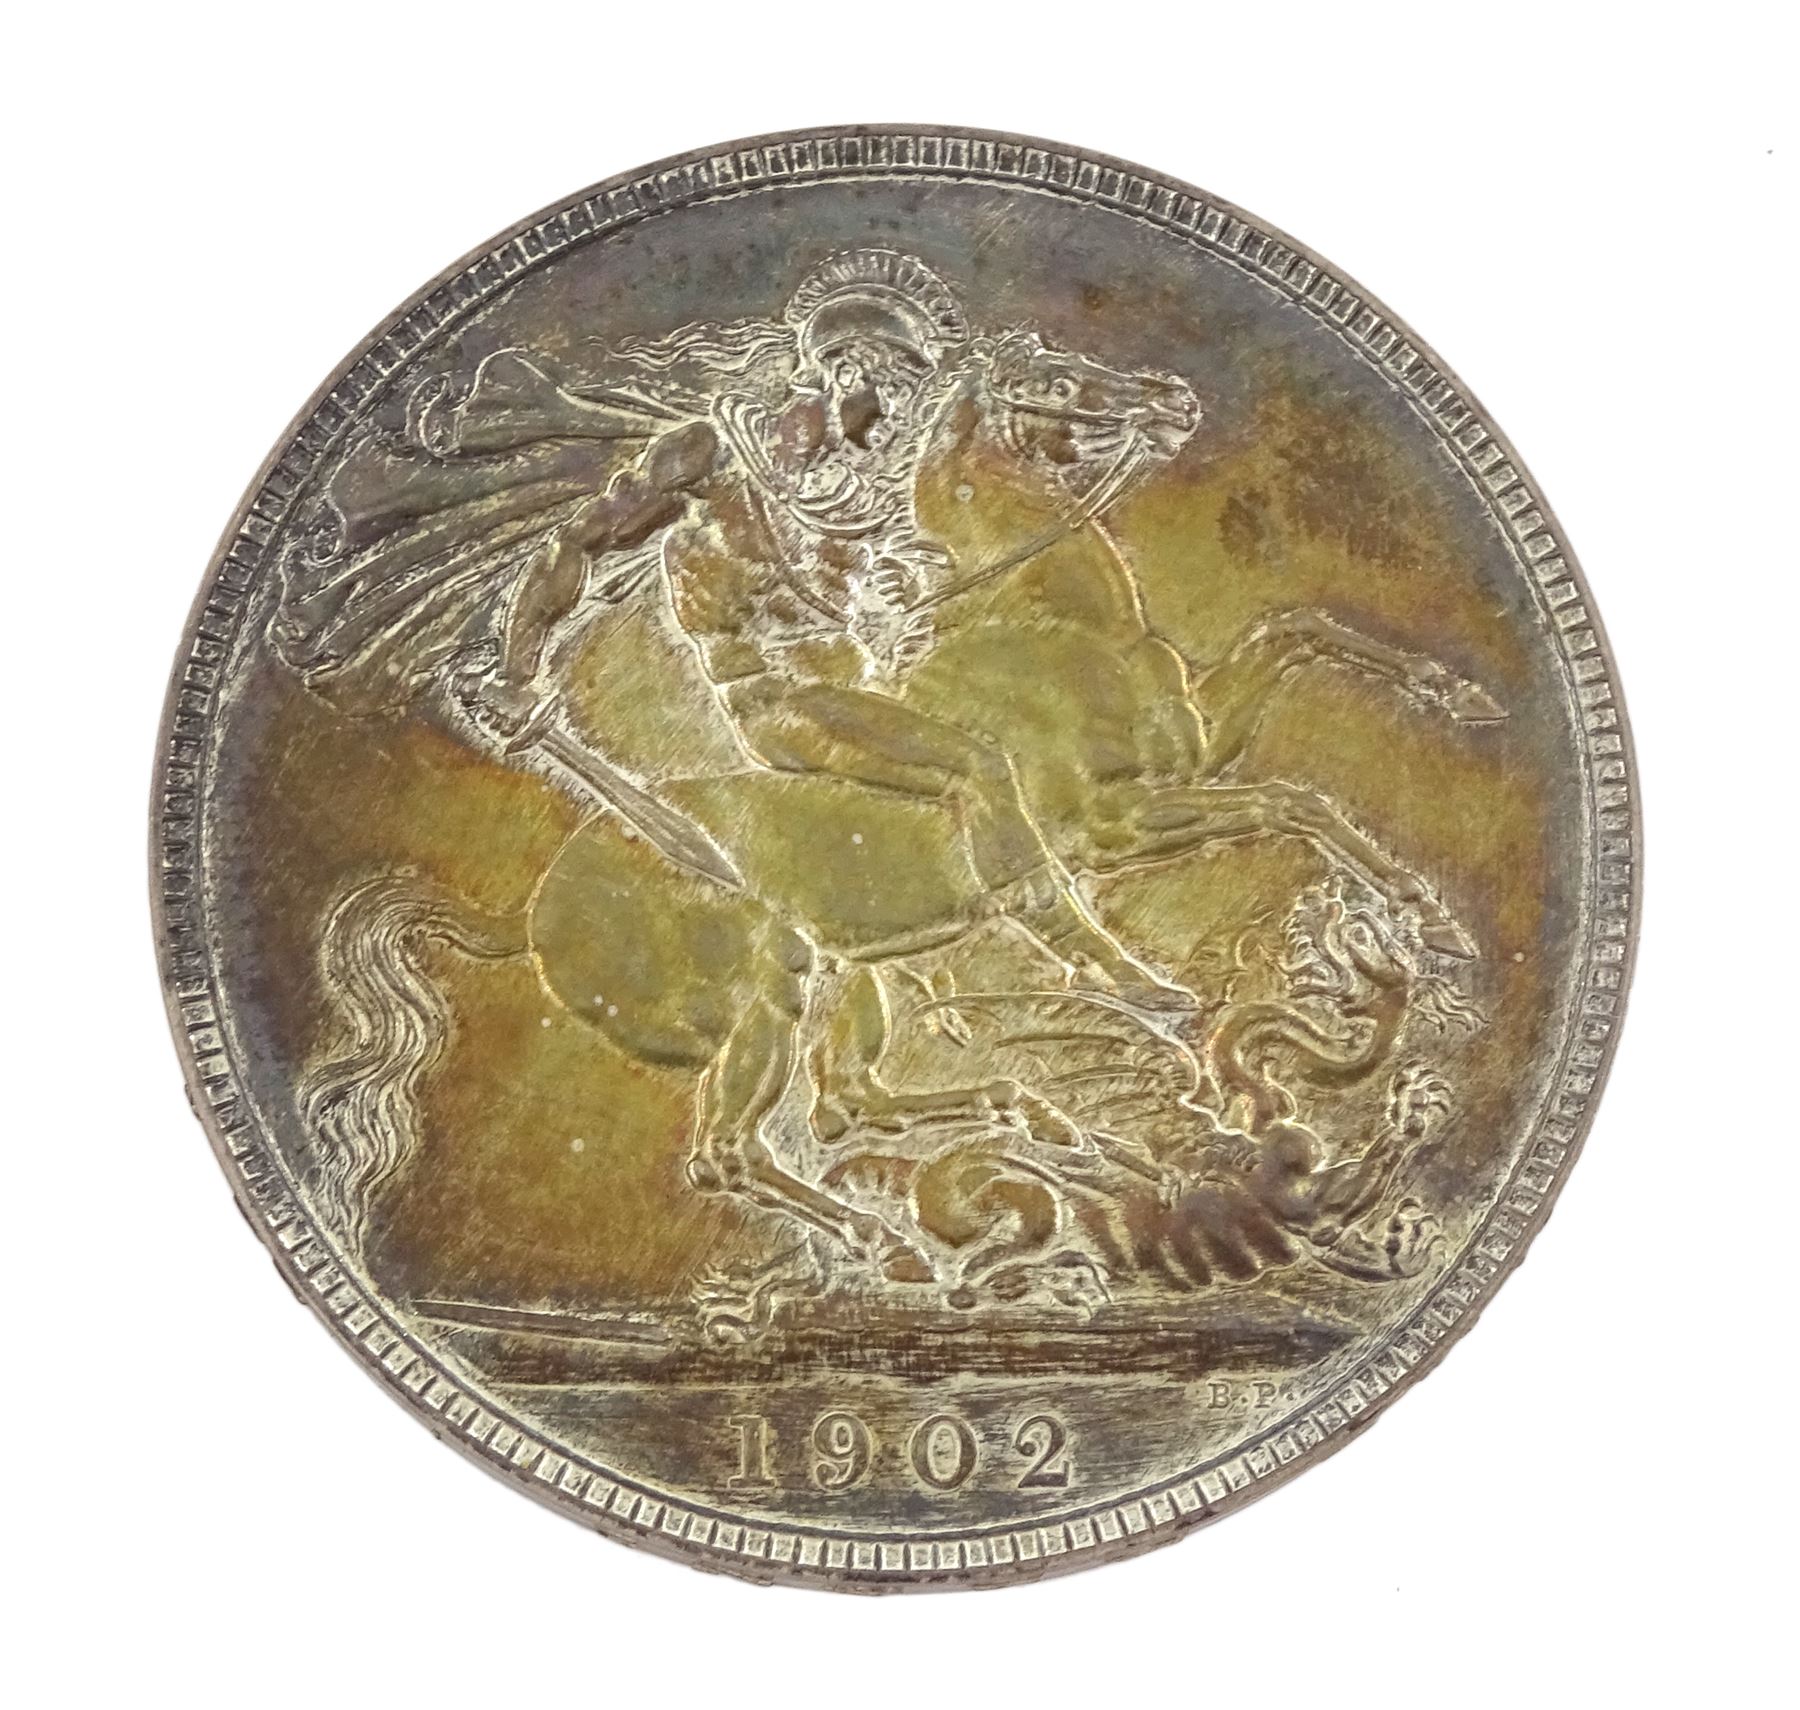 King Edward VII 1902 matt proof short coin set - Image 19 of 26